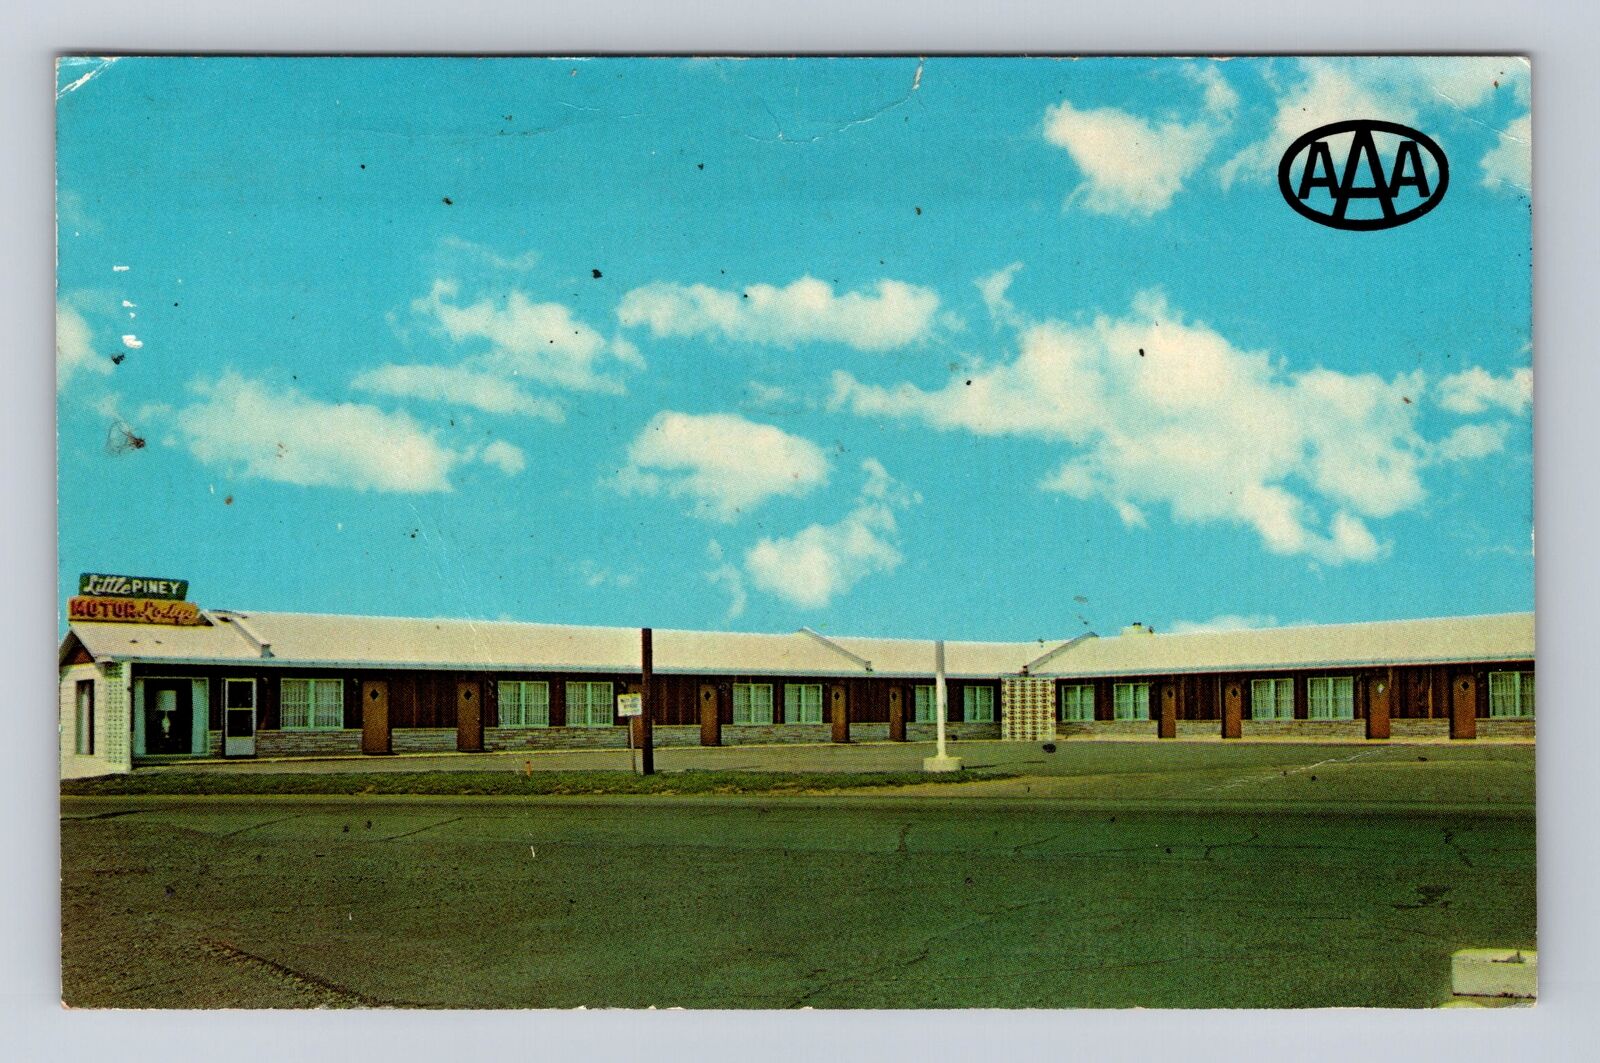 Rolla MO-Missouri, Little Piney Motor Inn Advertising, Vintage Souvenir Postcard